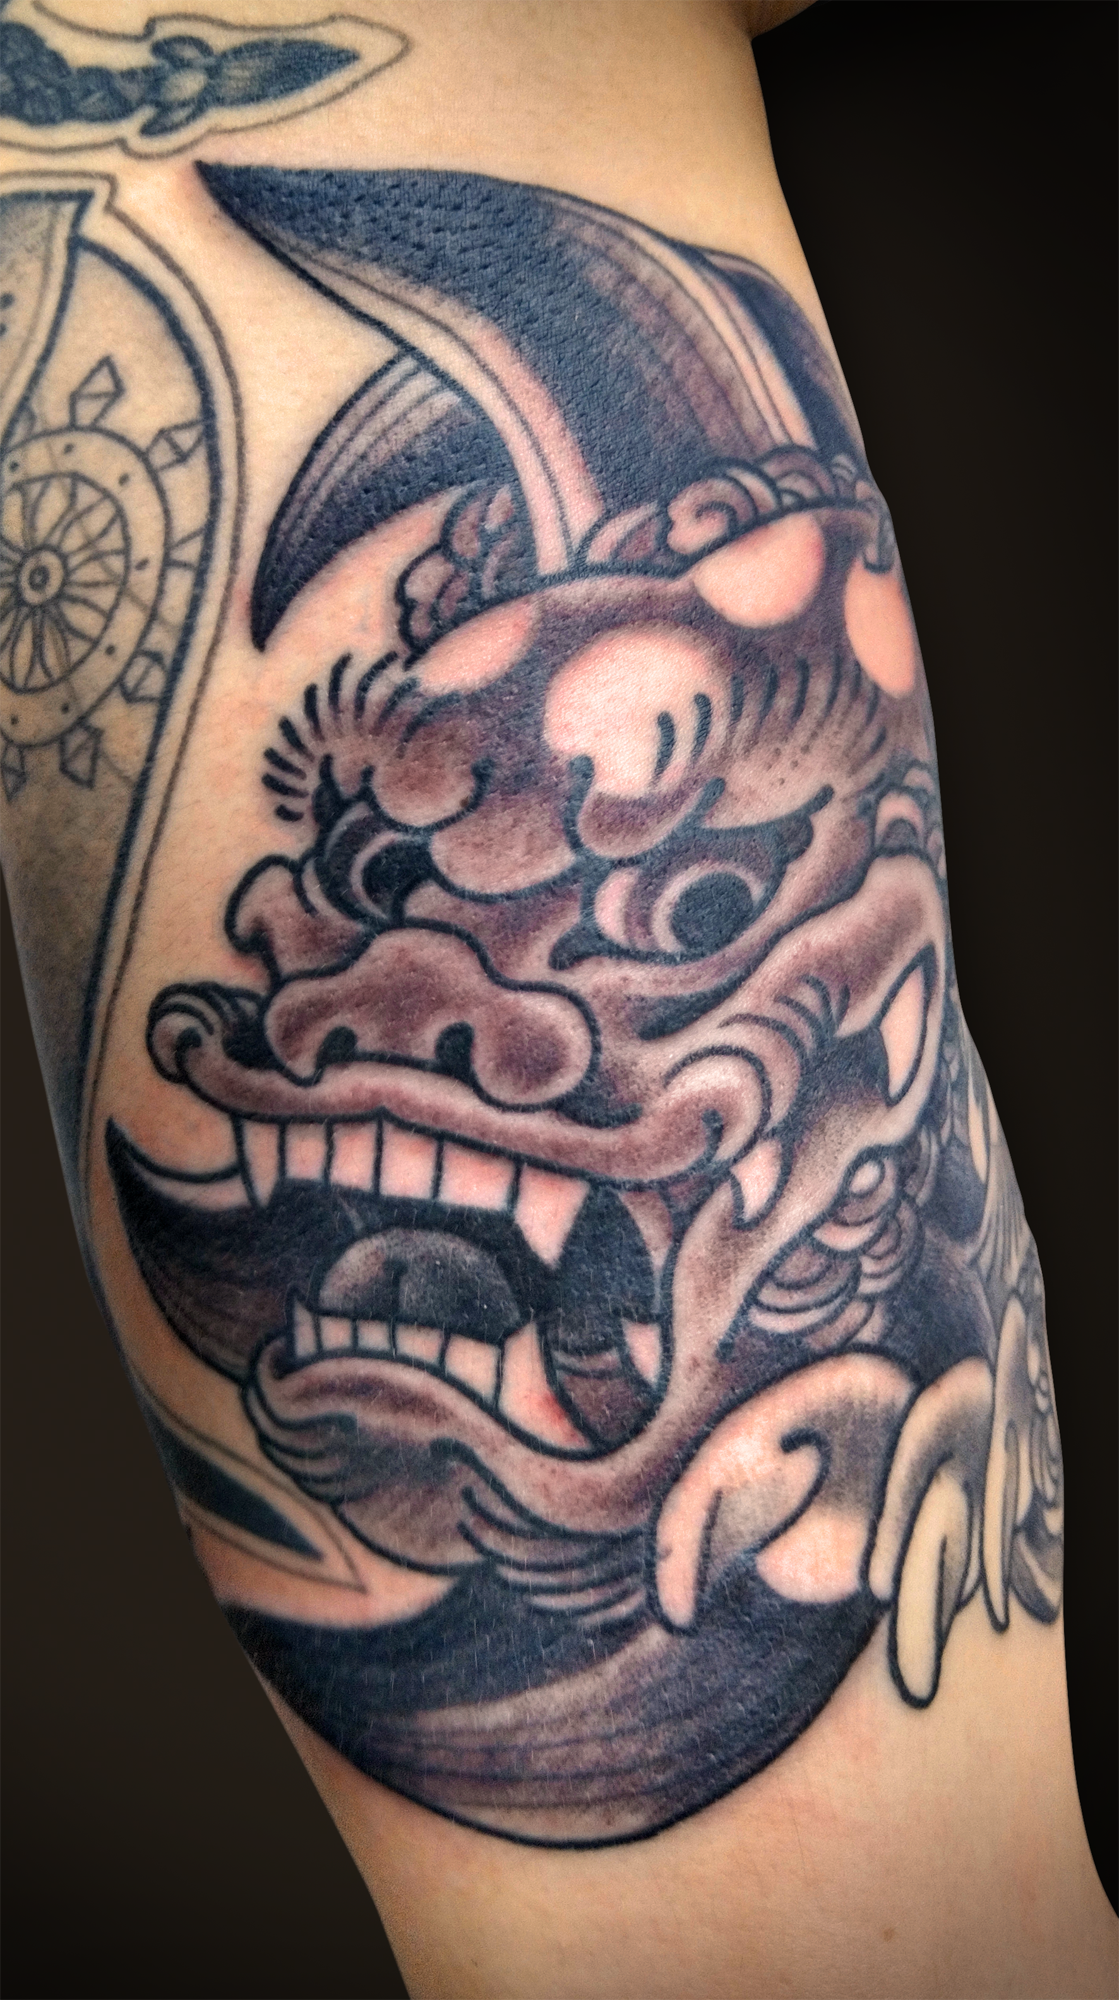 KING RAT TATTOO 作品 | LAVA gallery | Tattoo artist: Yuji Anai | キングラット | ラバギャラリー | タトゥーアート | 福岡県北九州市 | KIMG0035